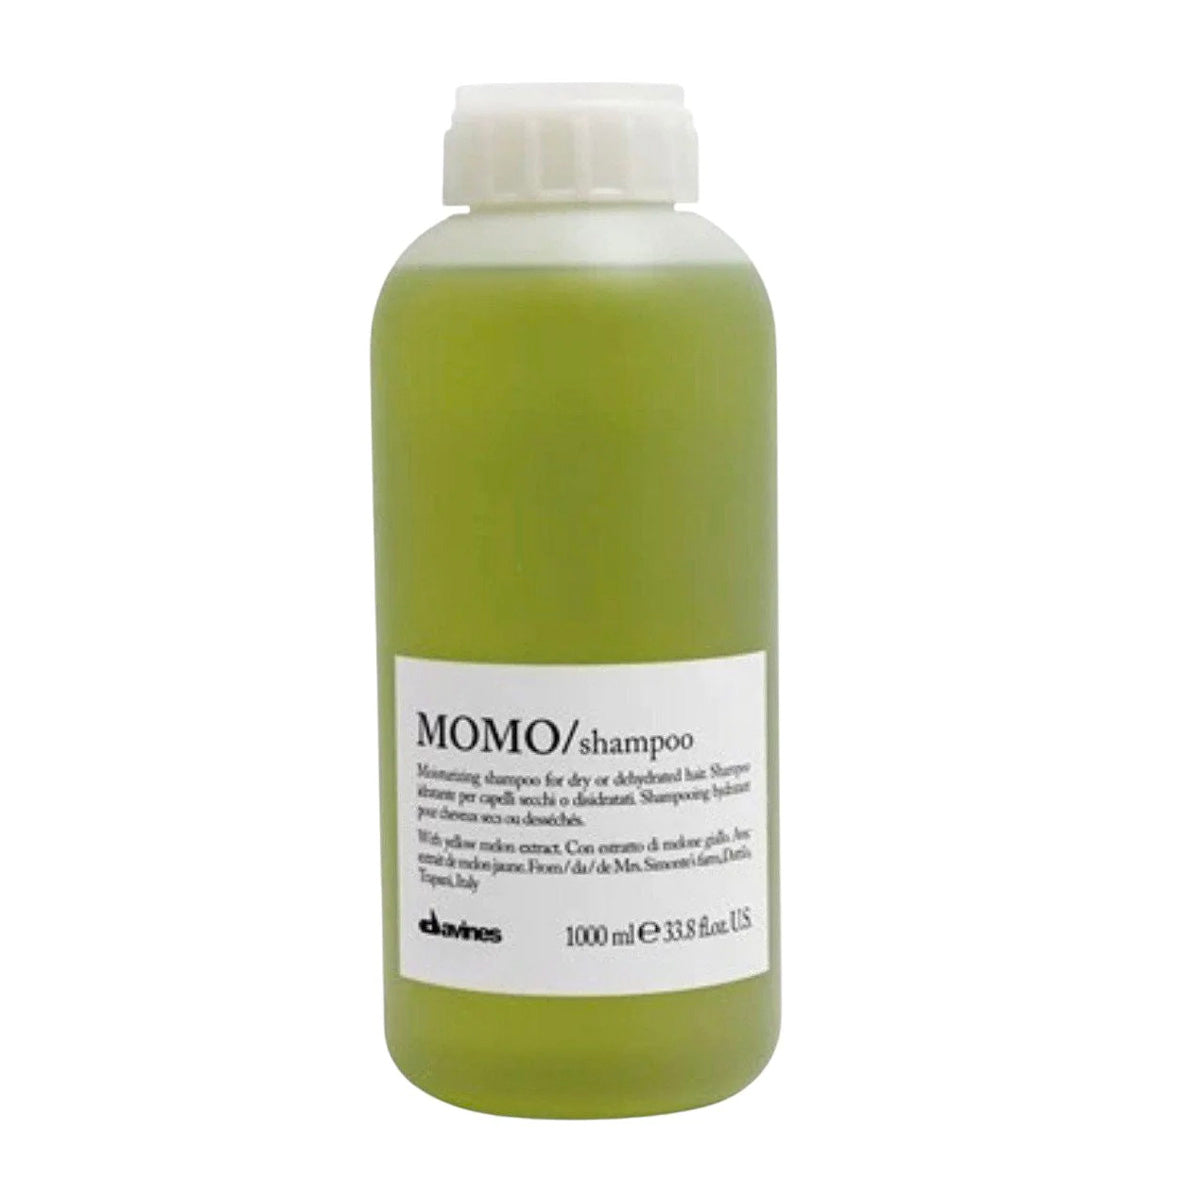 Momo/ Shampoo